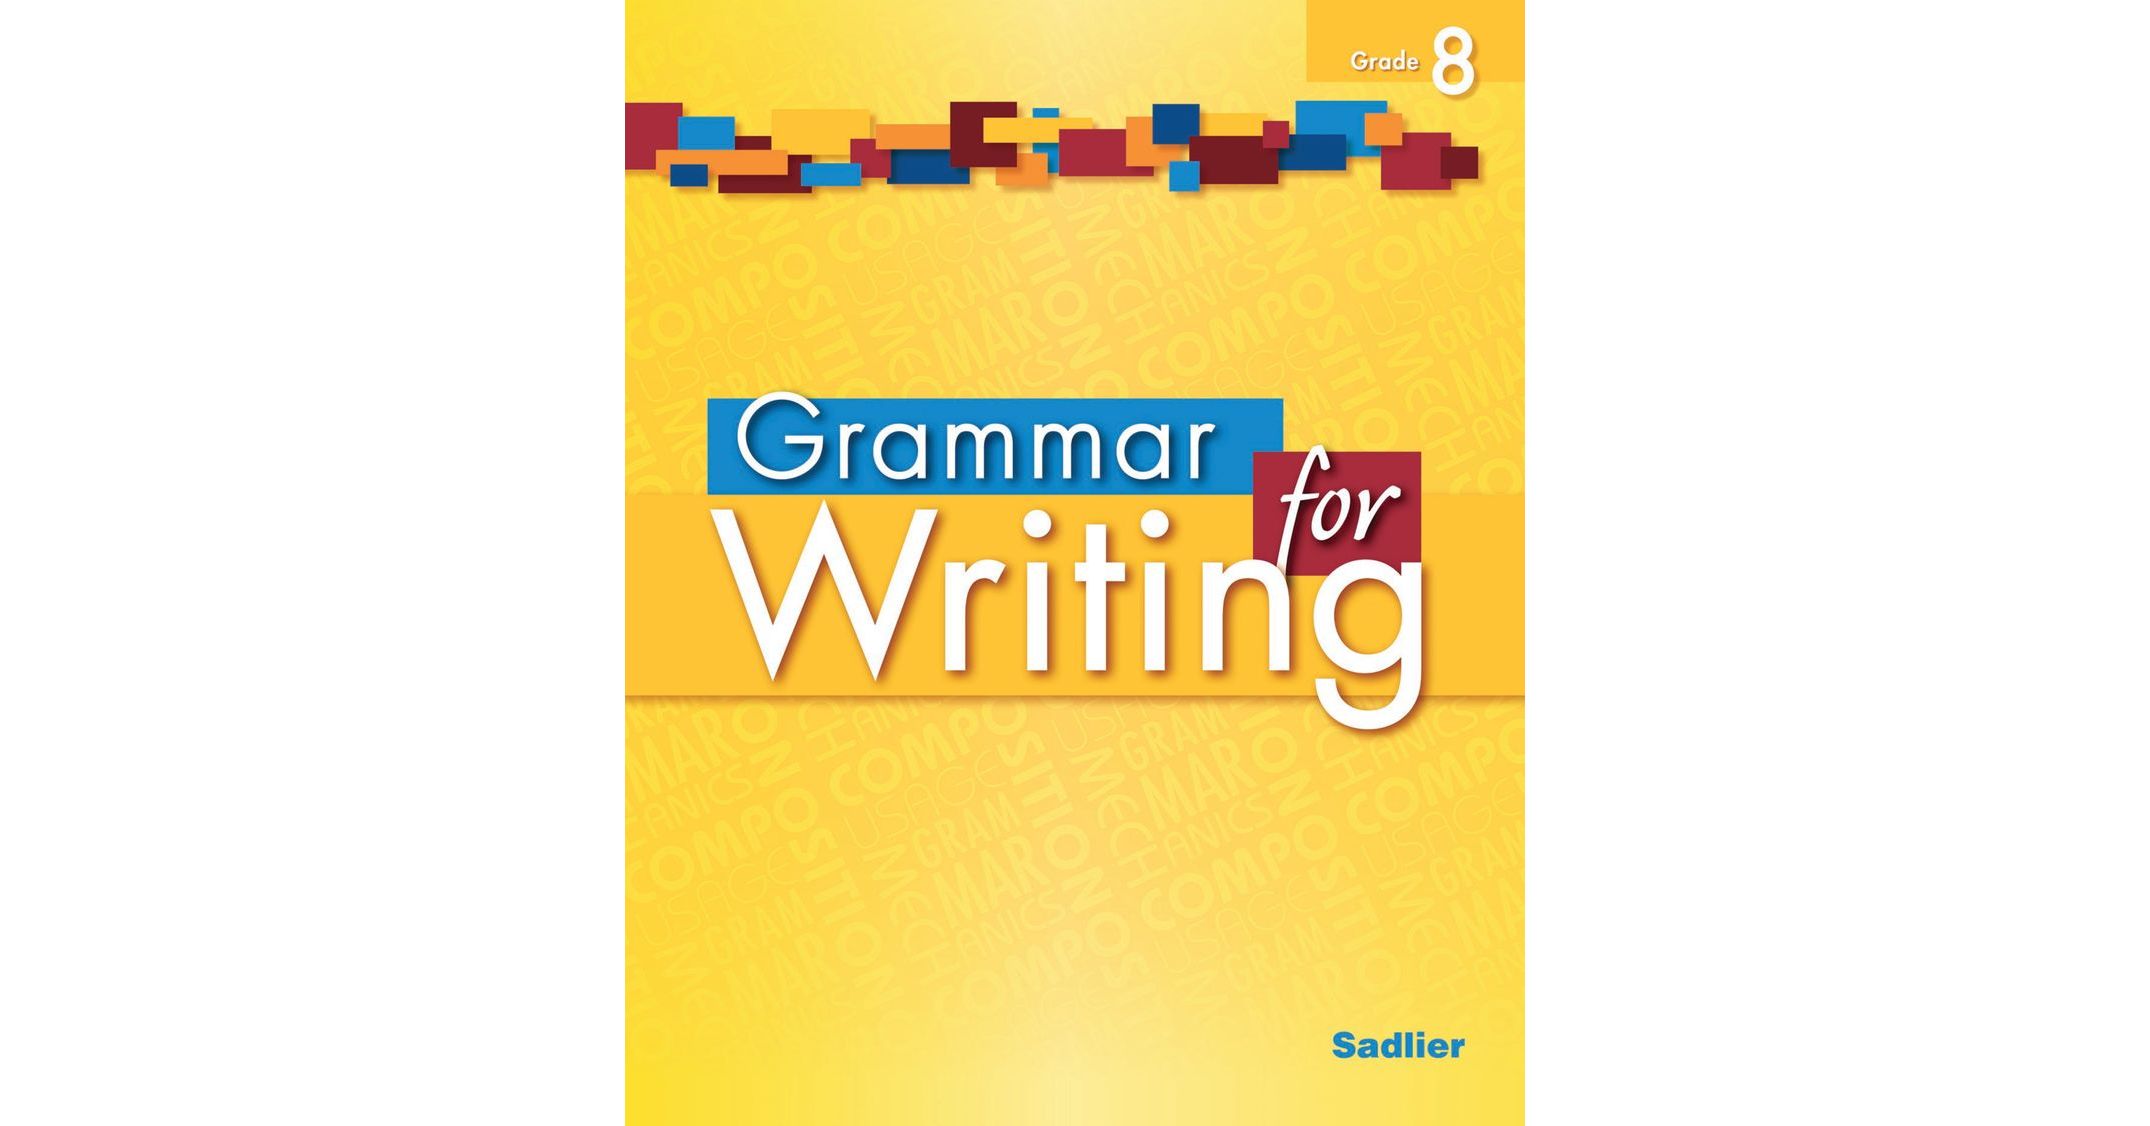 grammar-for-writing-grade-8-answer-key